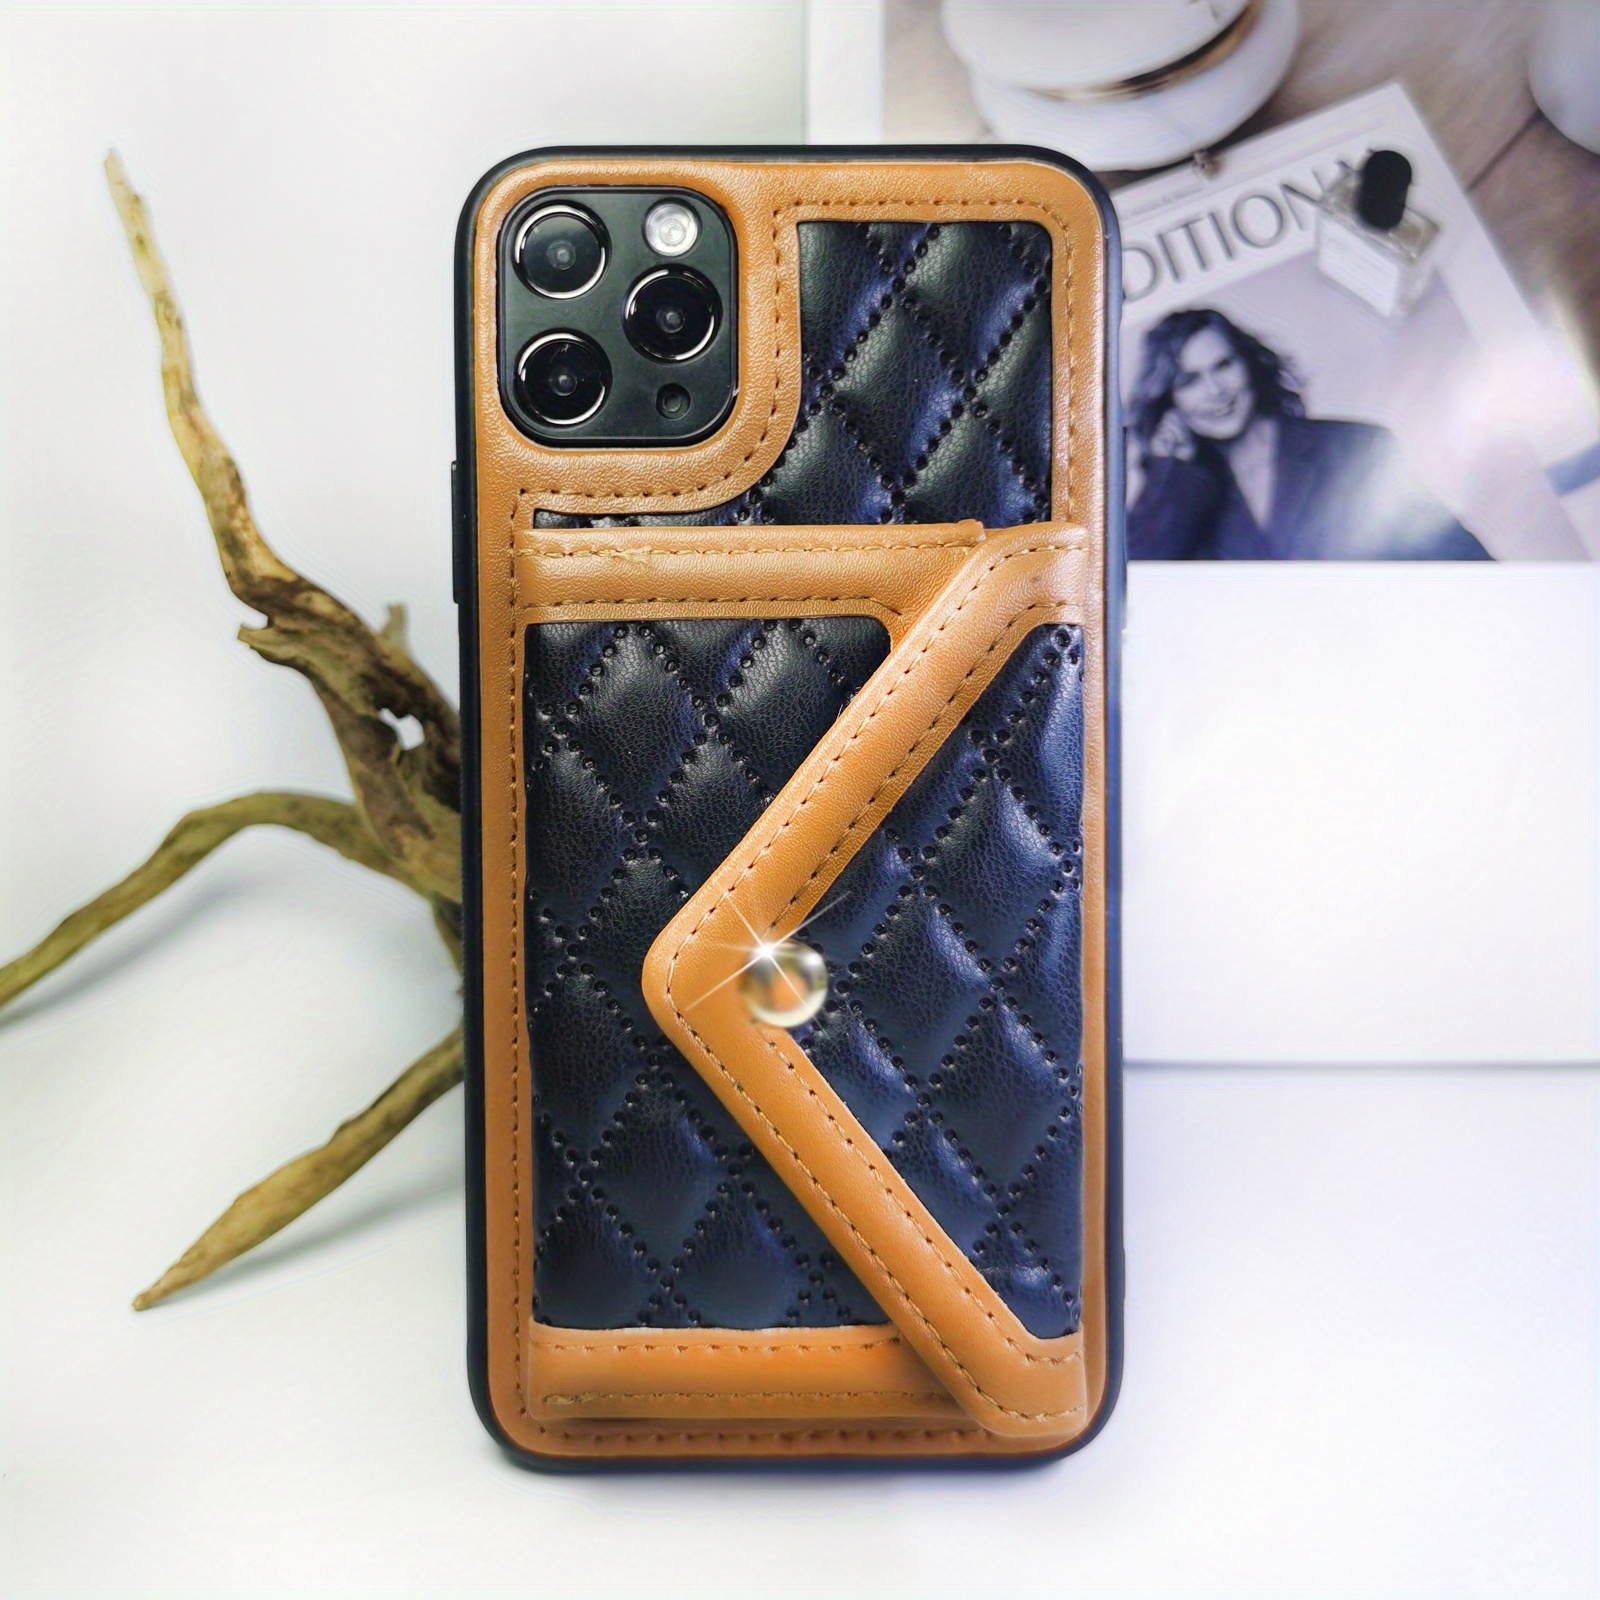 Louis Vuitton Wallet Case iphone 11,12 iPhone 11,12 Pro iPhone 11